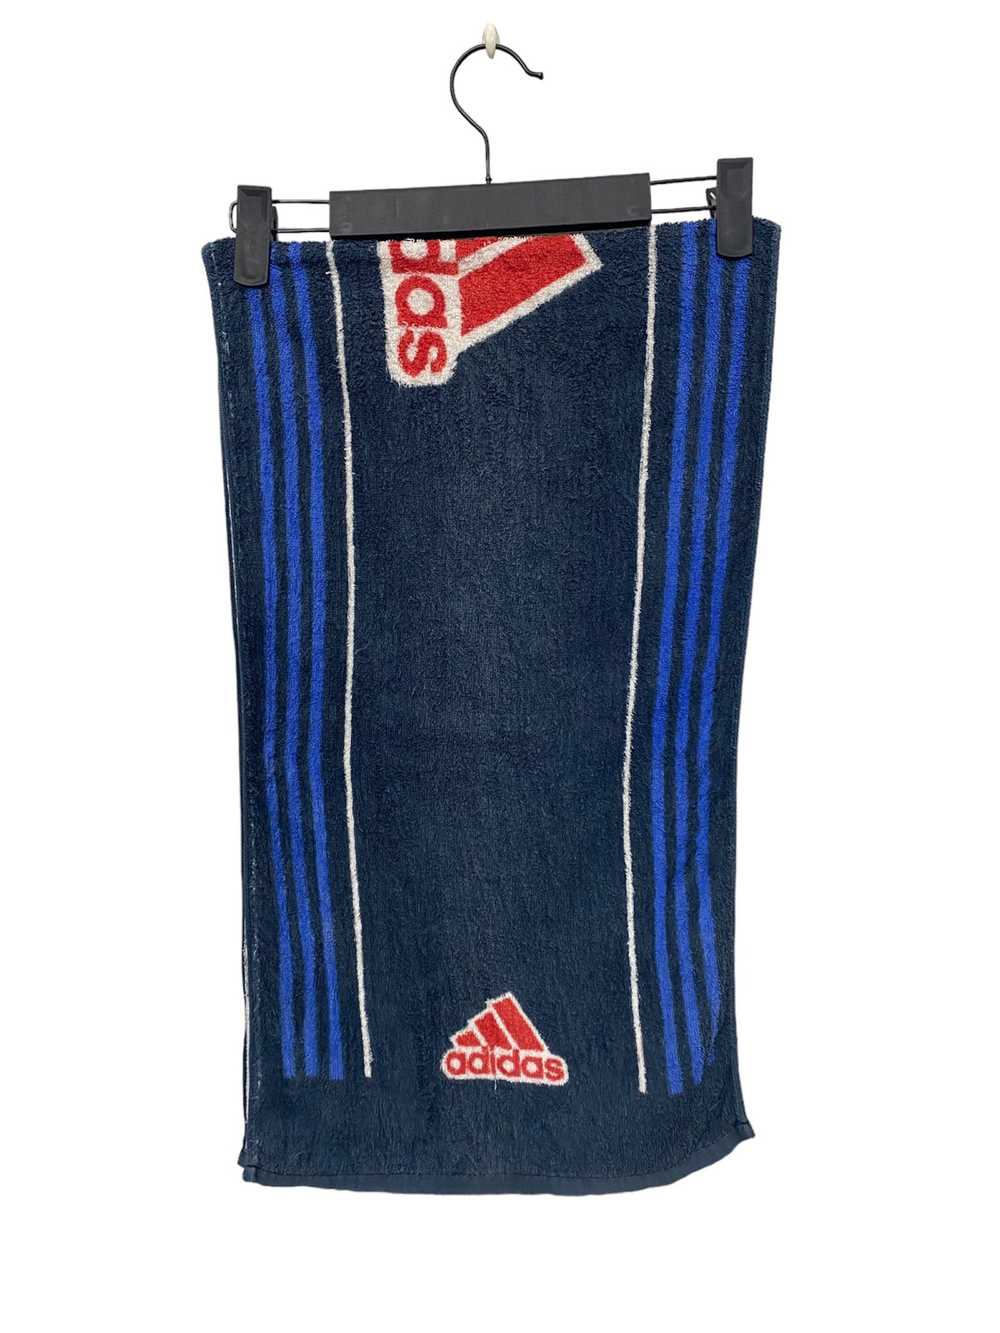 Adidas × Brand ADIDAS sports Face / Hand Towel - image 2